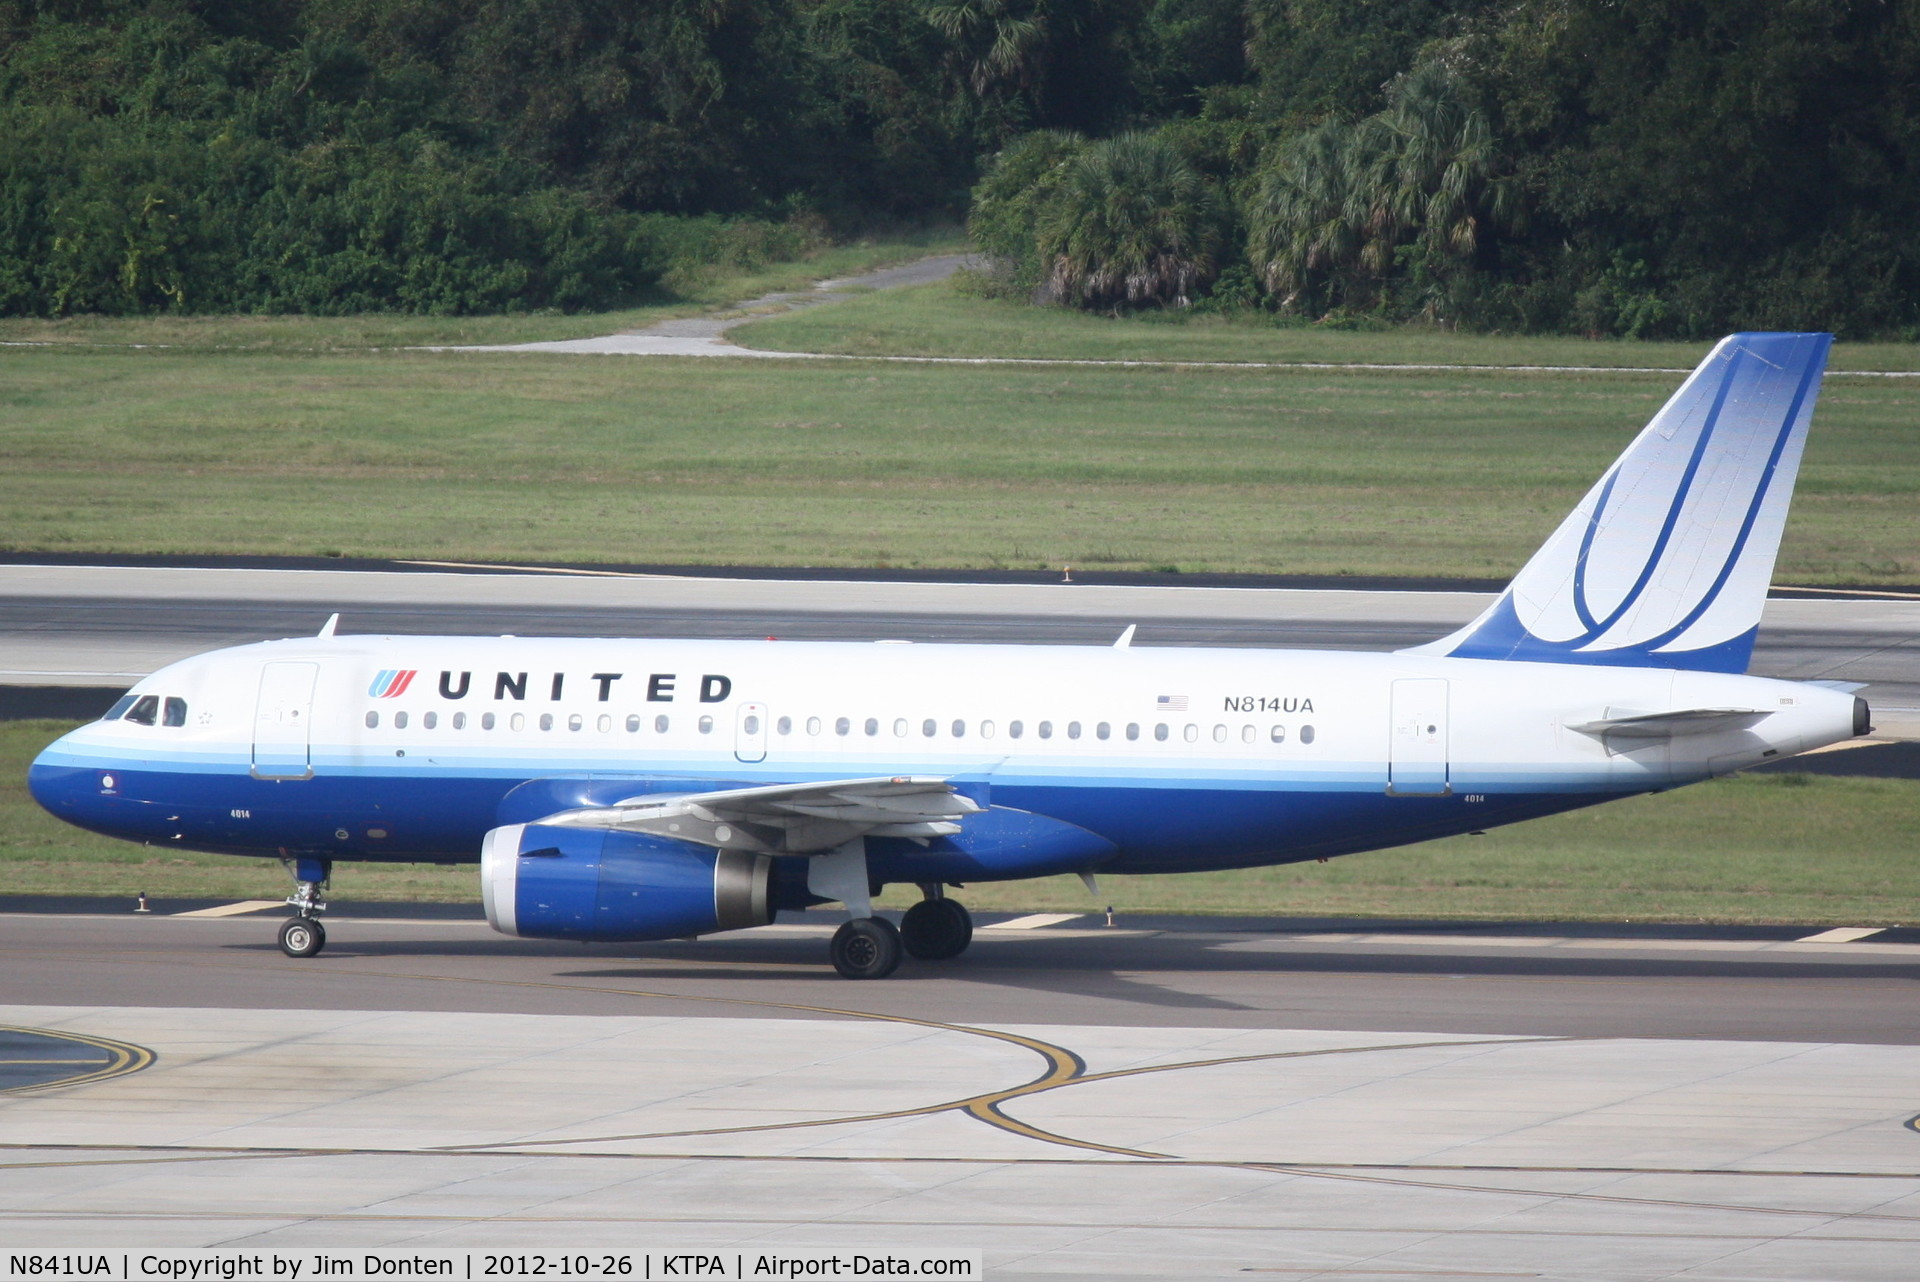 N841UA, 2001 Airbus A319-131 C/N 1545, United Flight 380 (N841UA) arrives at Tampa International Airport following a flight from Houston/Bush Intercontinental Airport